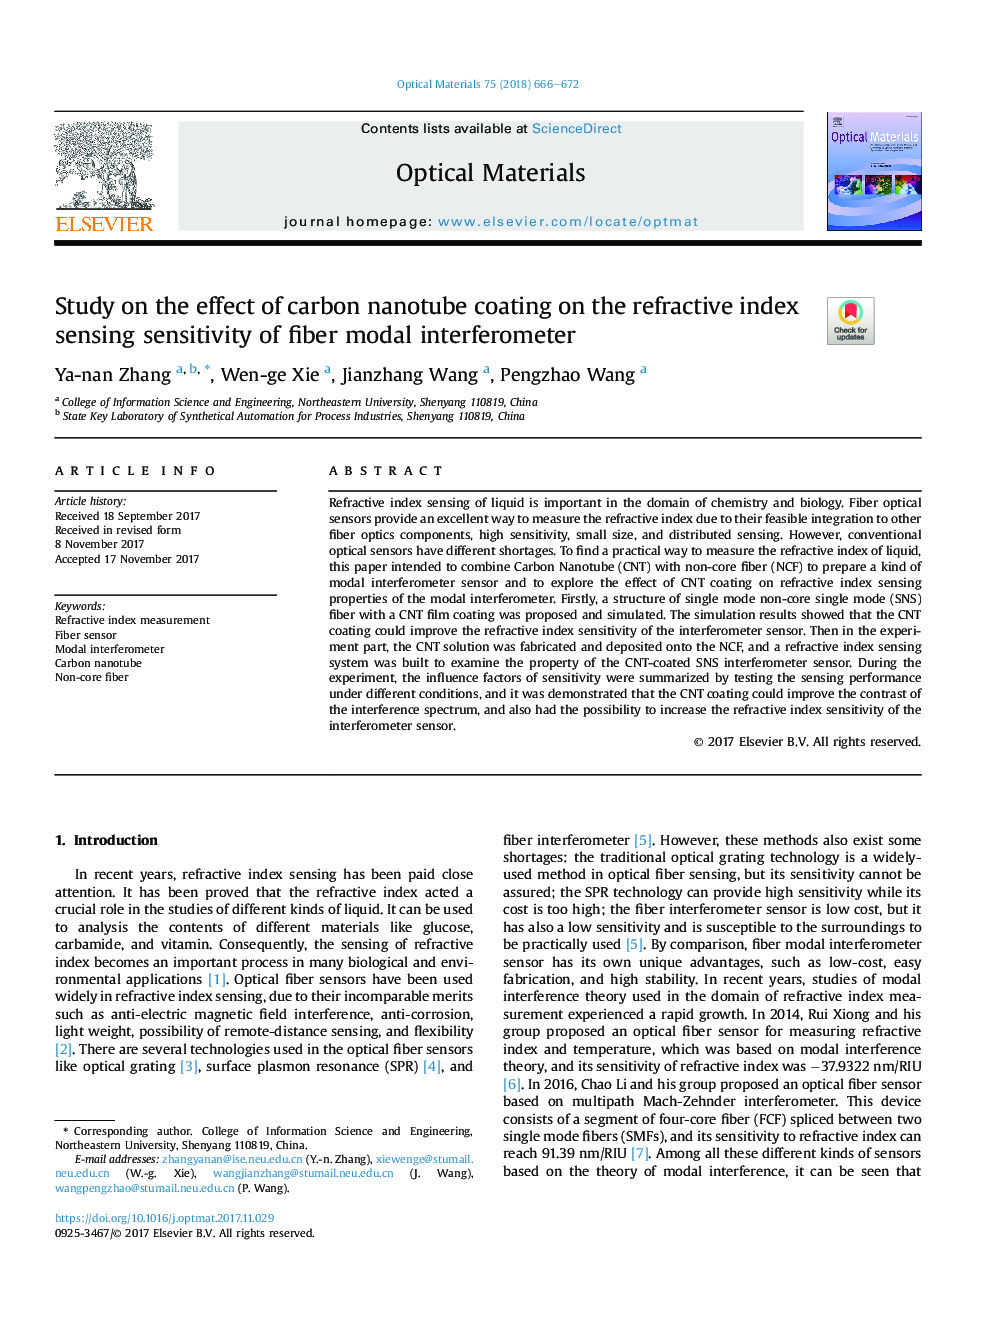 Study on the effect of carbon nanotube coating on the refractive index sensing sensitivity of fiber modal interferometer